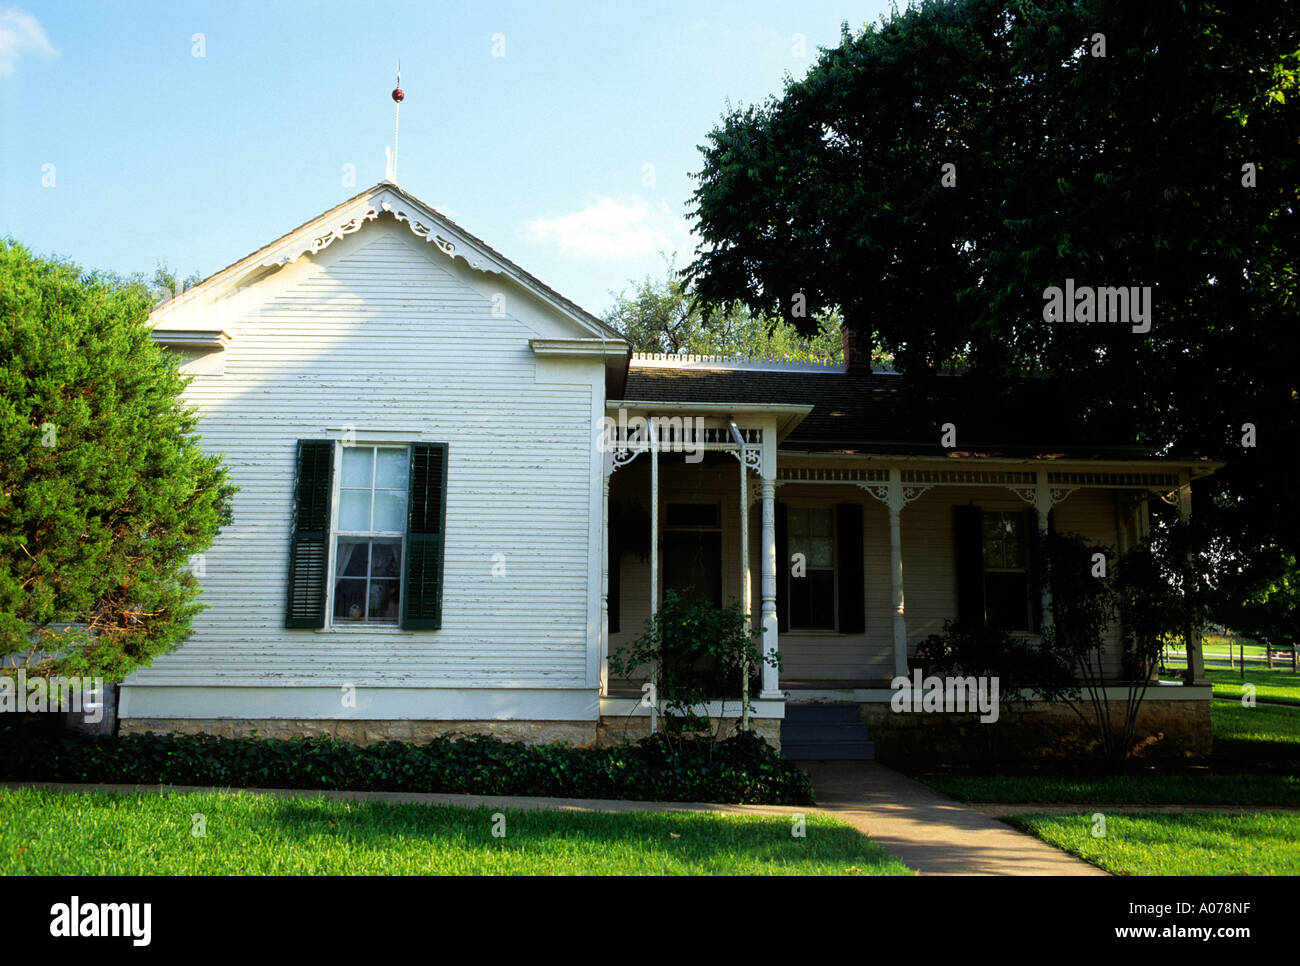 The Lyndon B. Johnson's boyhood home in Johnson City, Texas. Stock Photo